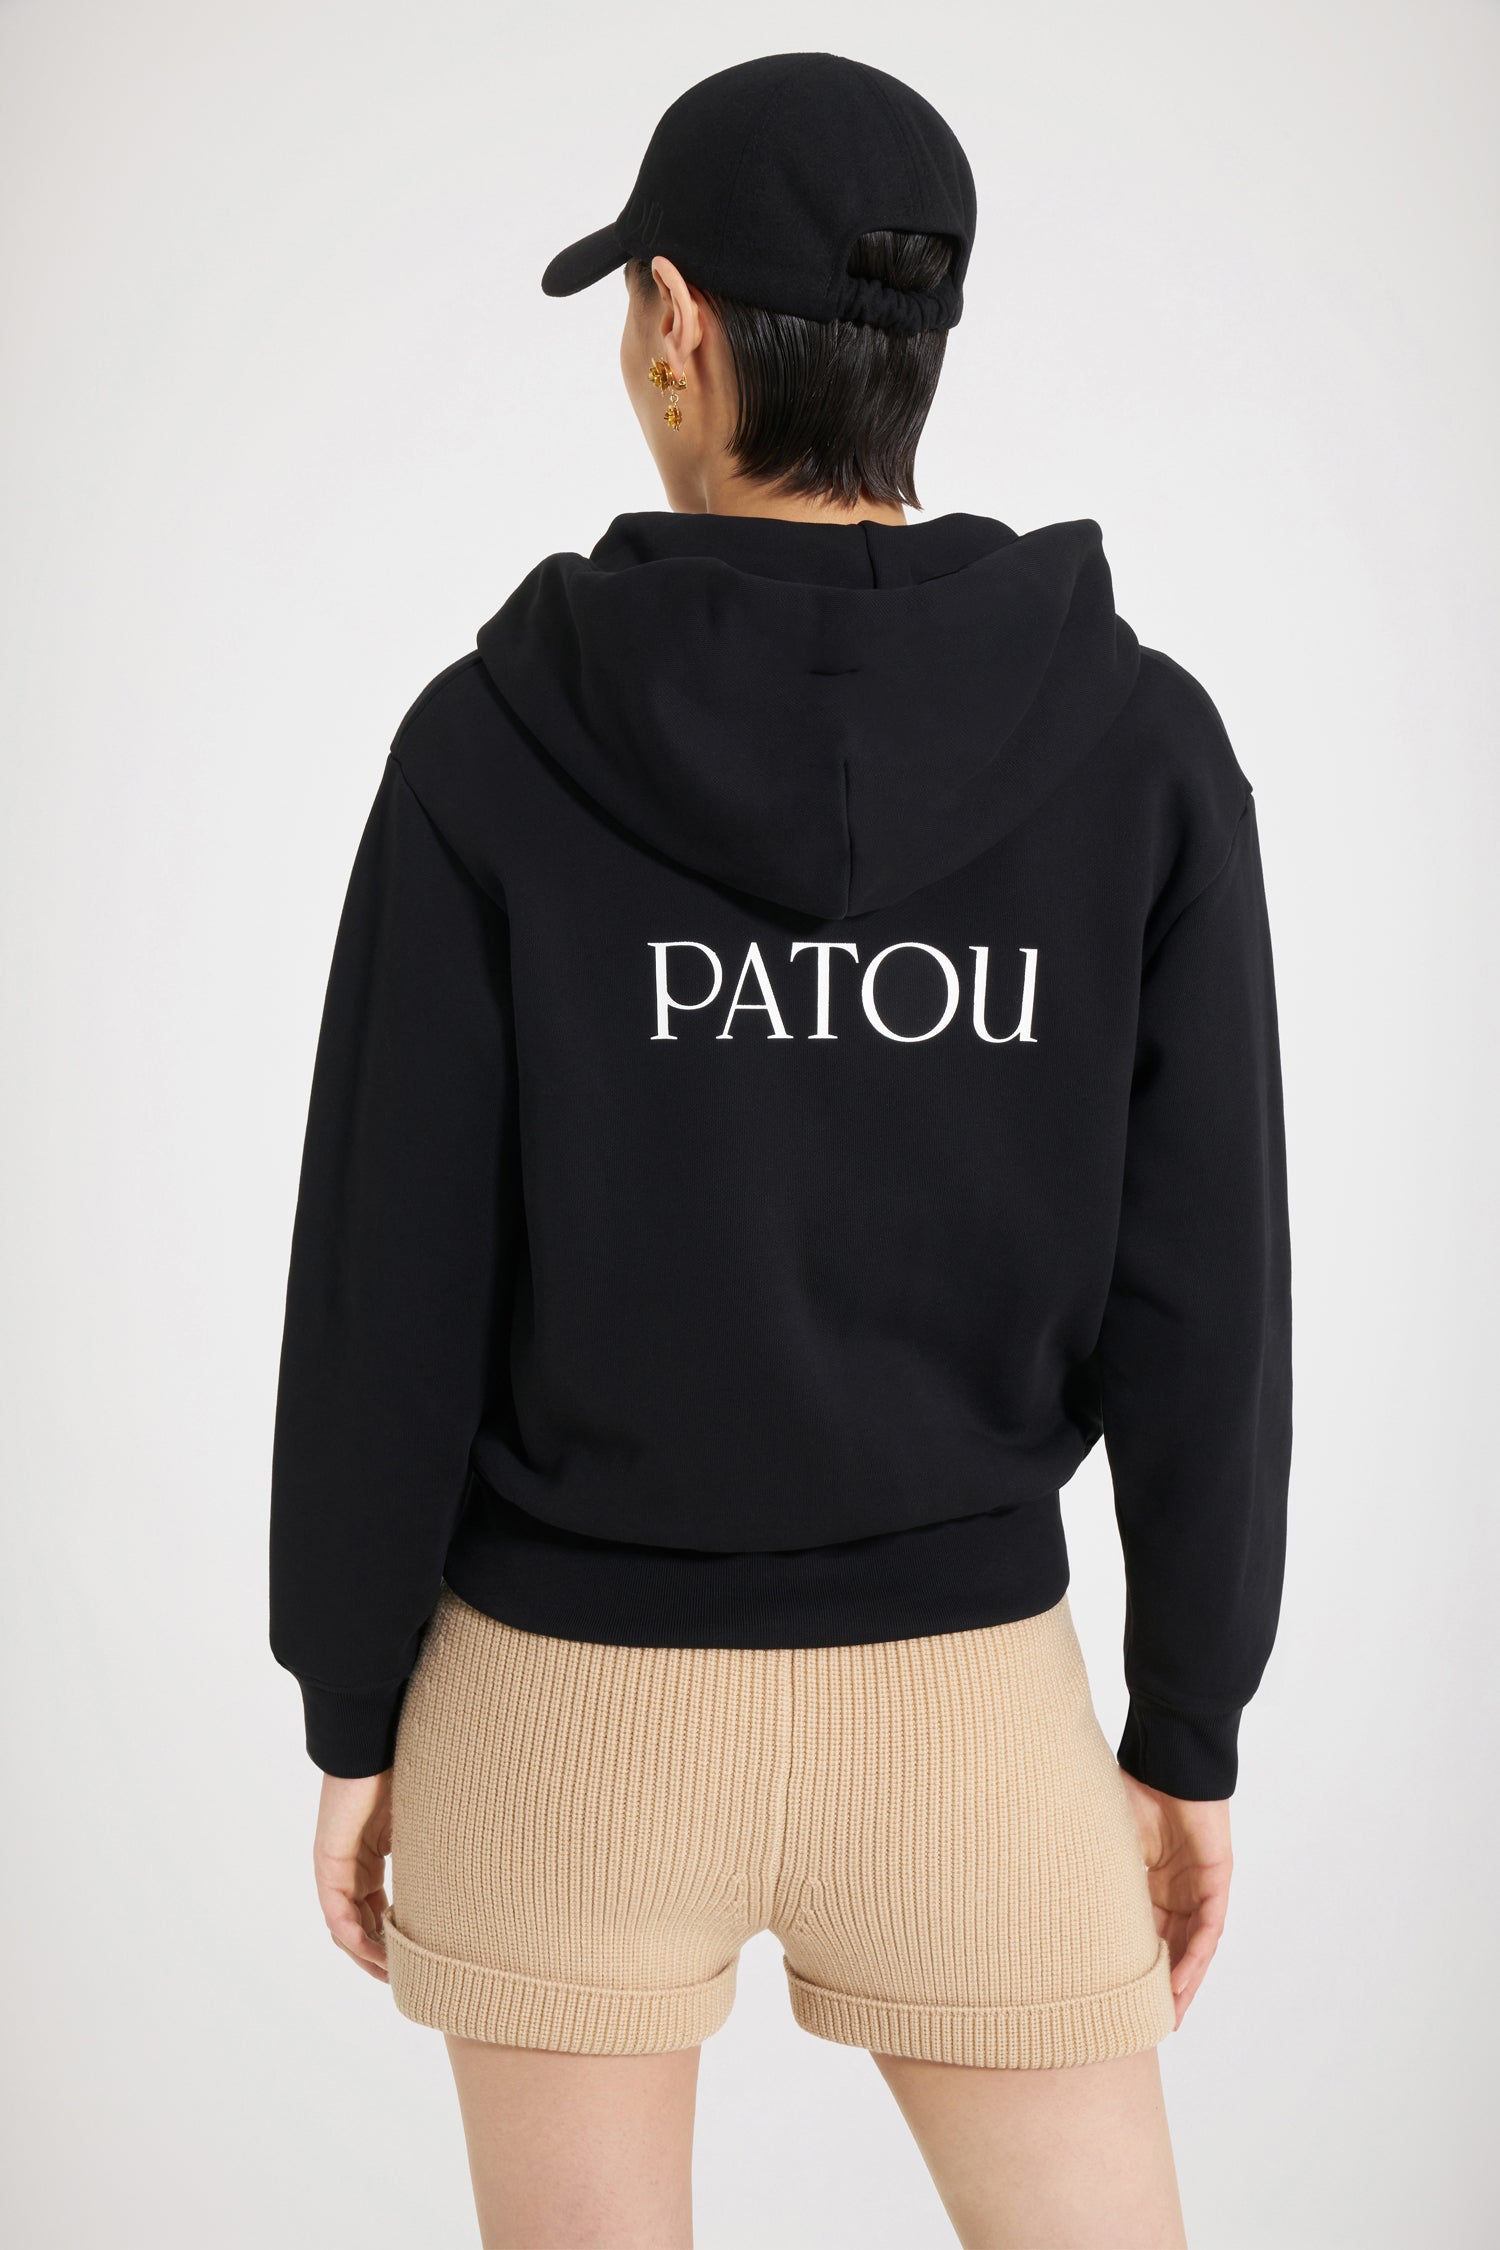 Patou | オーガニックコットン パトゥ ジップアップ フーディー